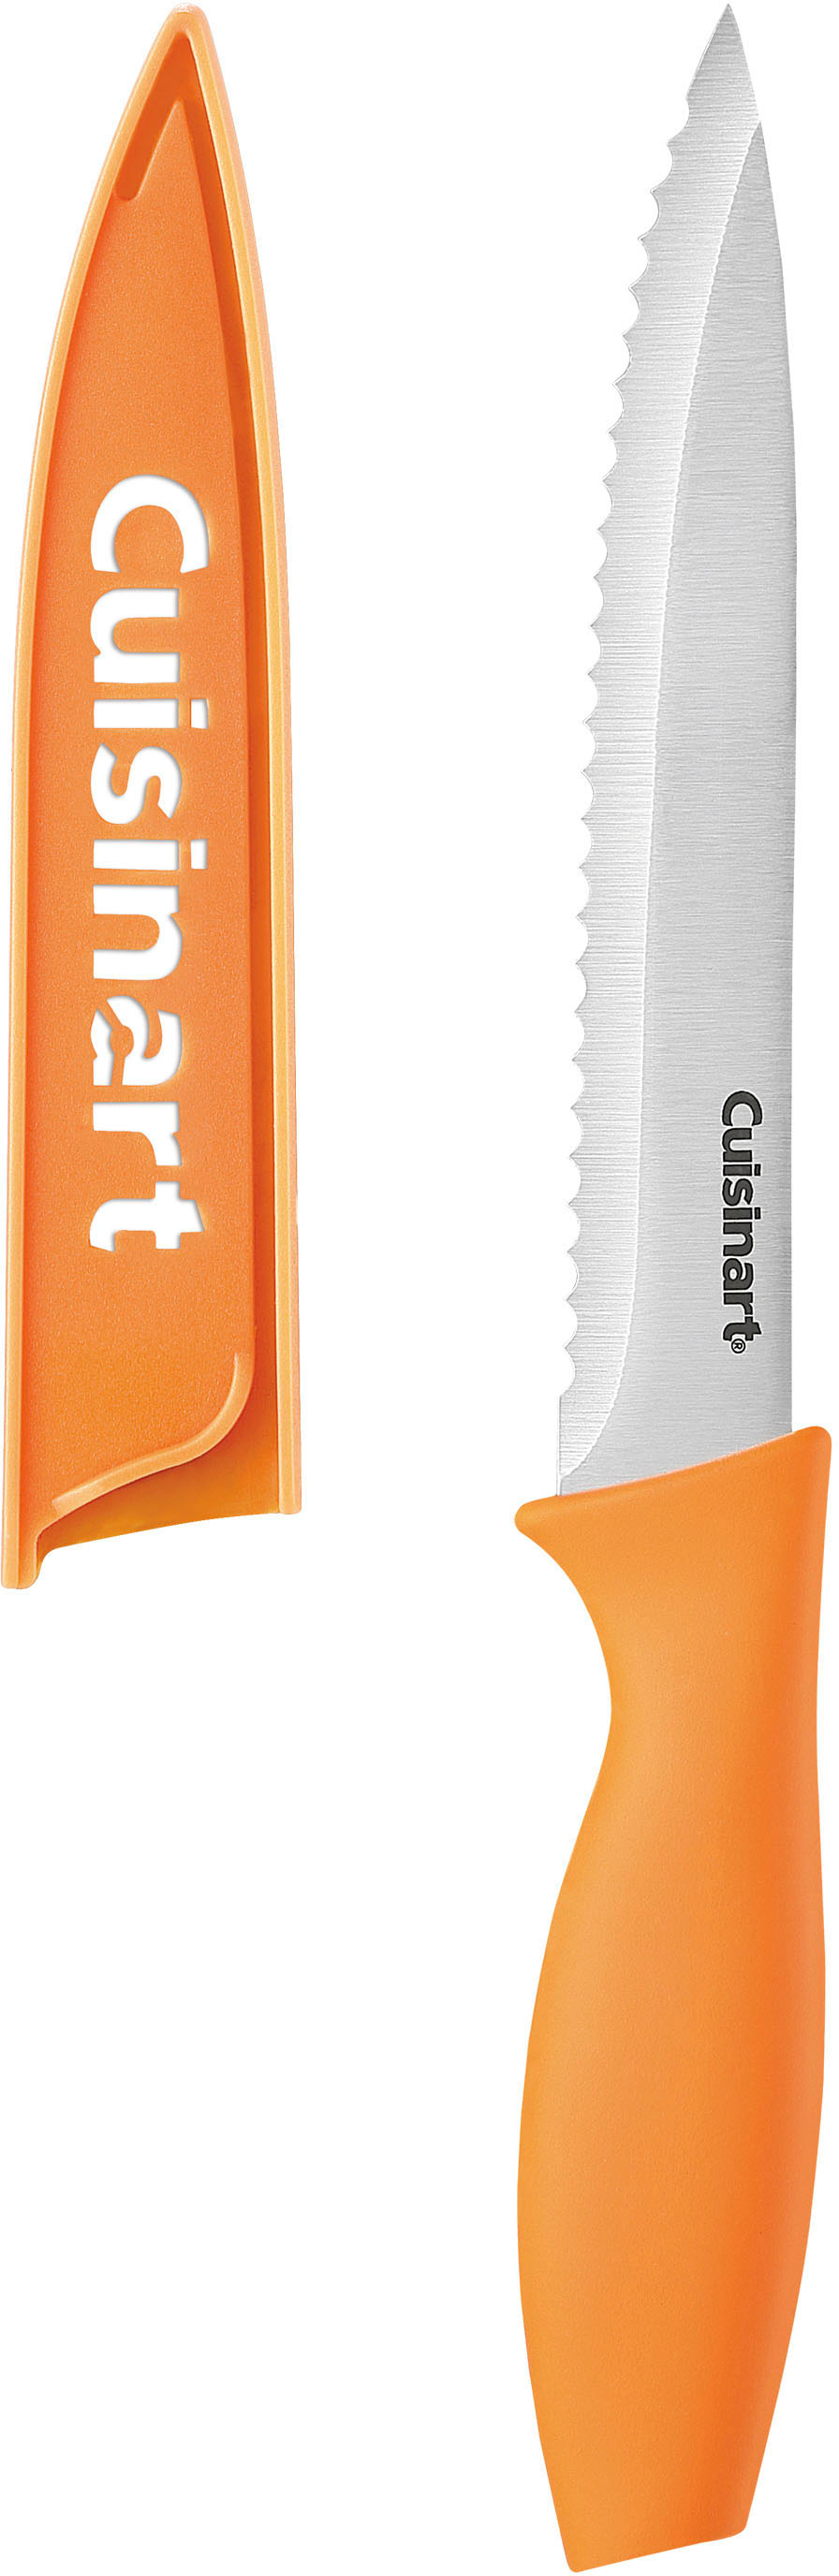 Cutlery Cuisinart Knife Set - 4 knives Nice!!! Red Orange Blue Handles